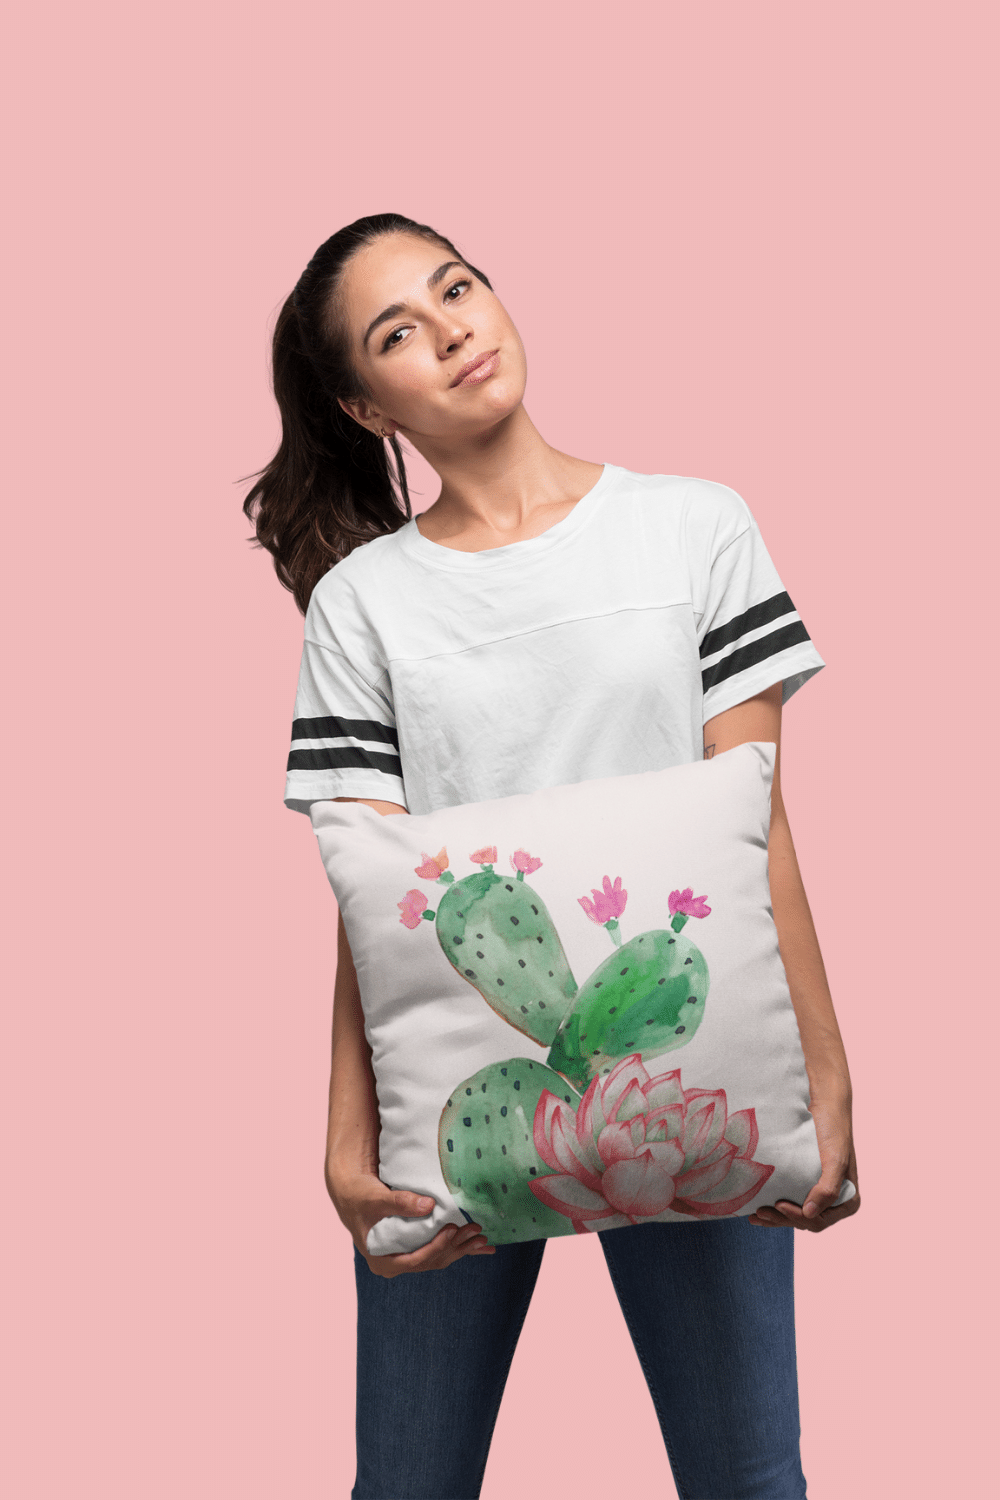 Pillows - Dorm Room Pillow - Cactus & Flowers